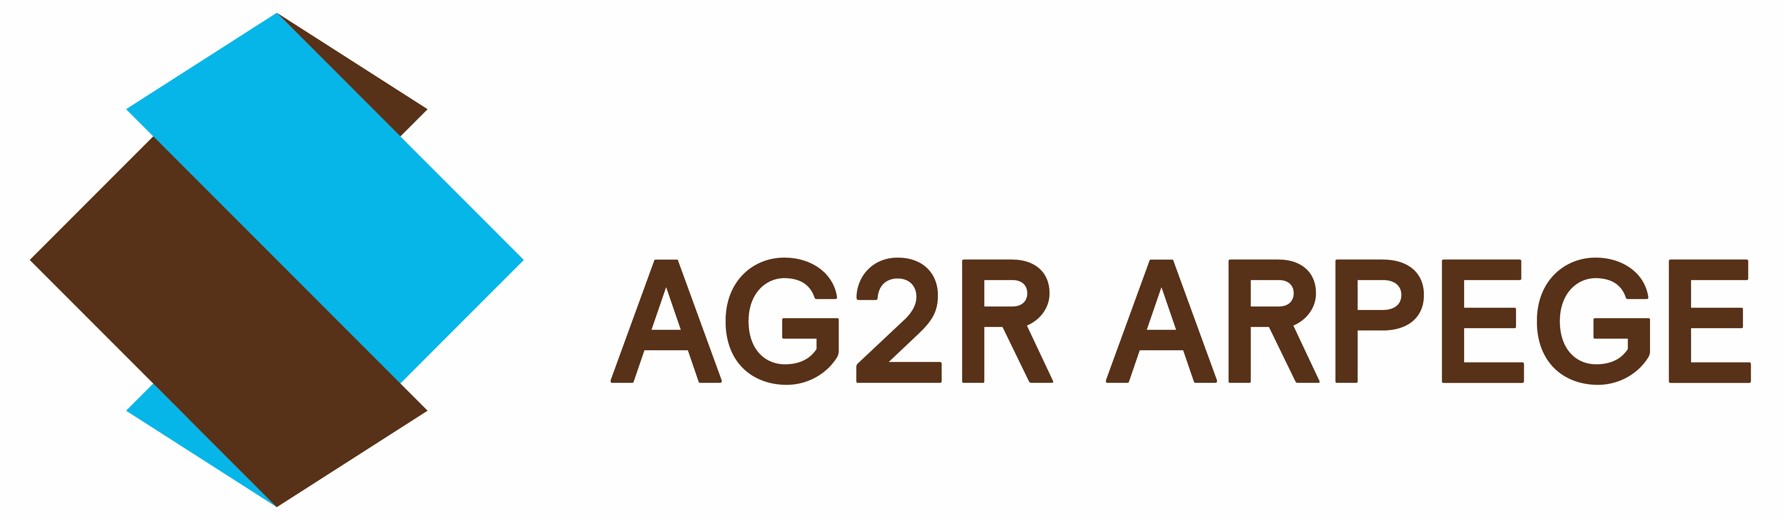 ag2r-arpege